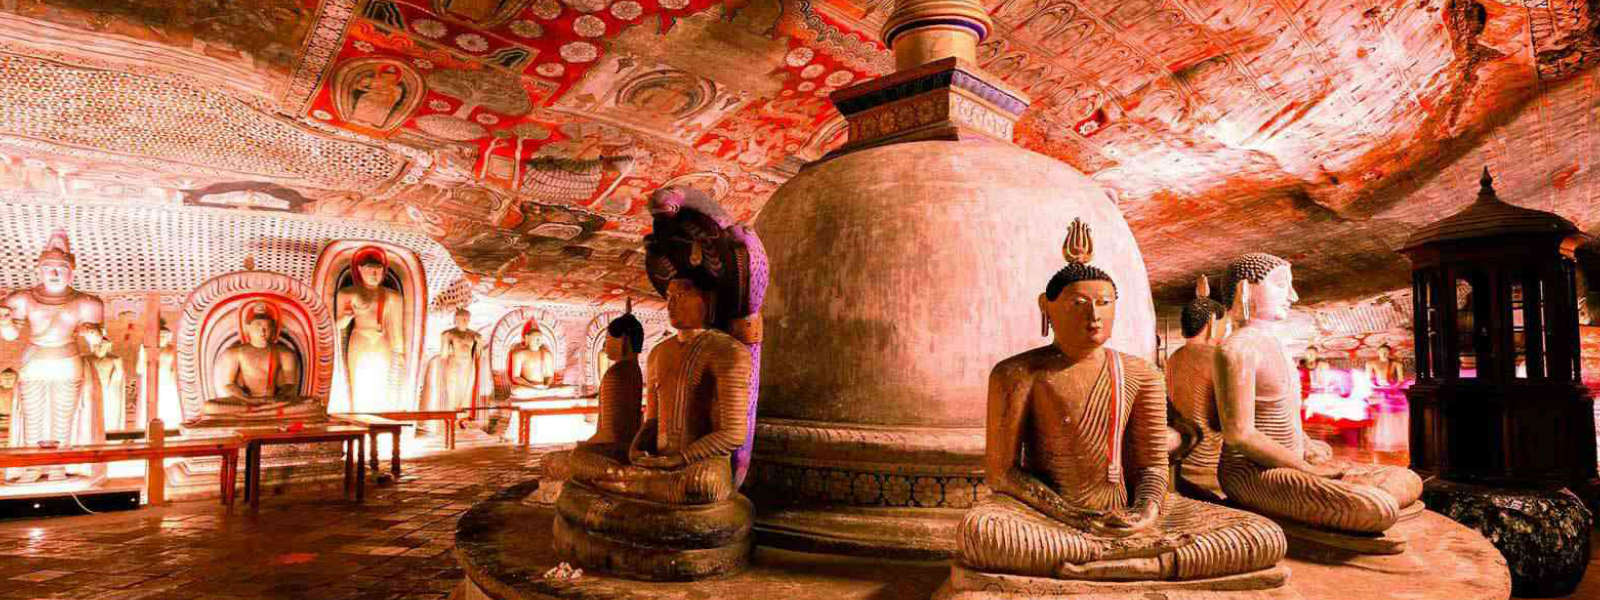 18 statues in Dambulla cave temple at risk 